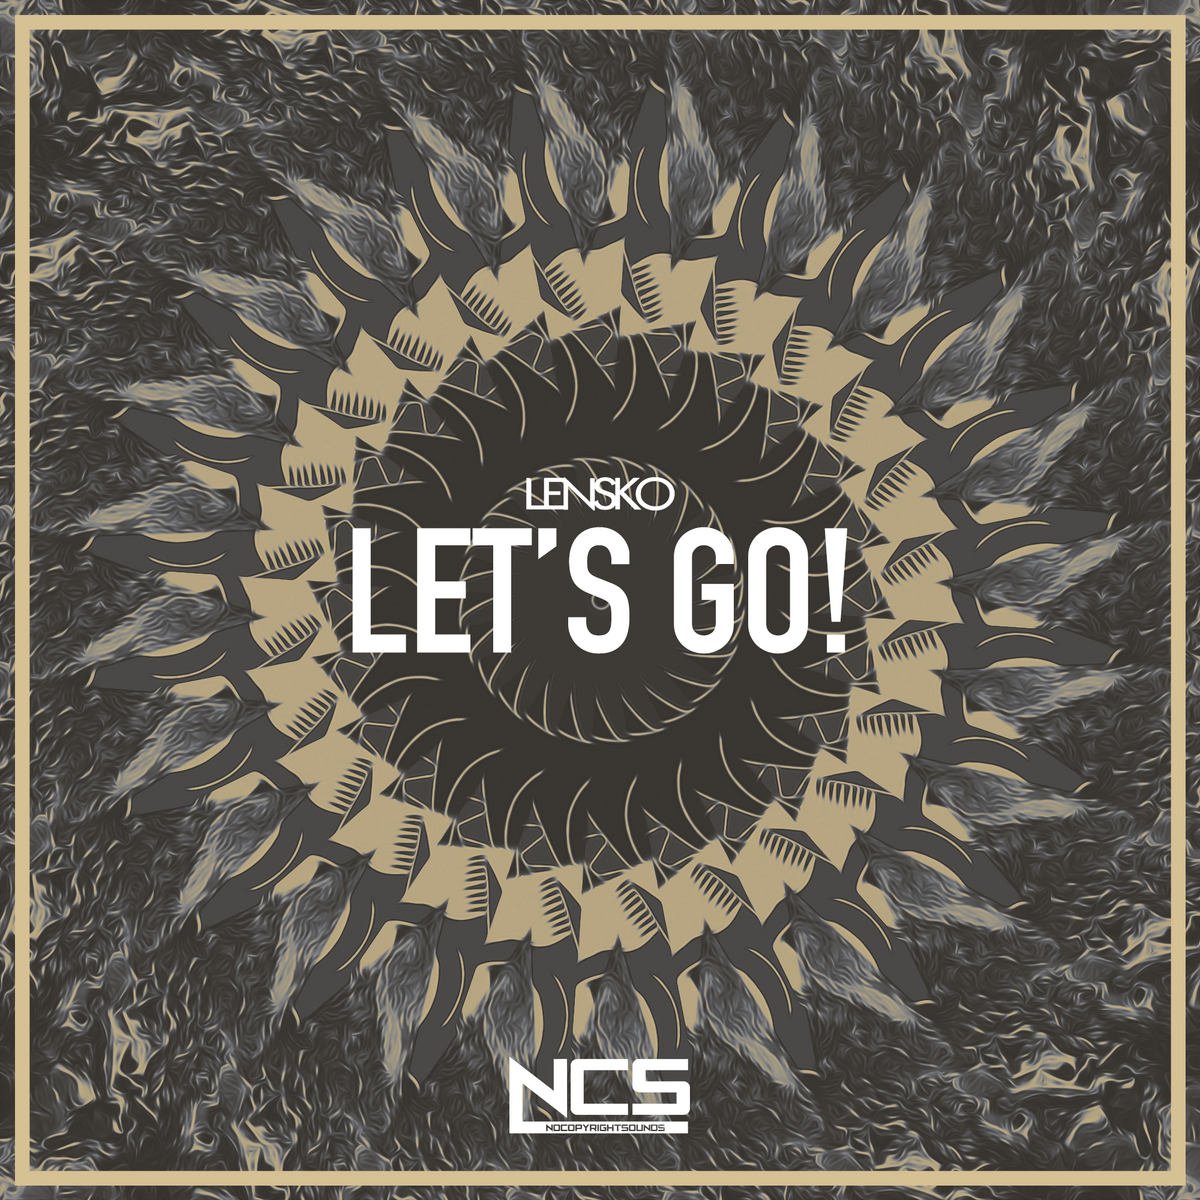 Let its go. Lensko Lets go. Lensko - Let's go! [NCS release]. NCS обложки. Let/s go ремикс.